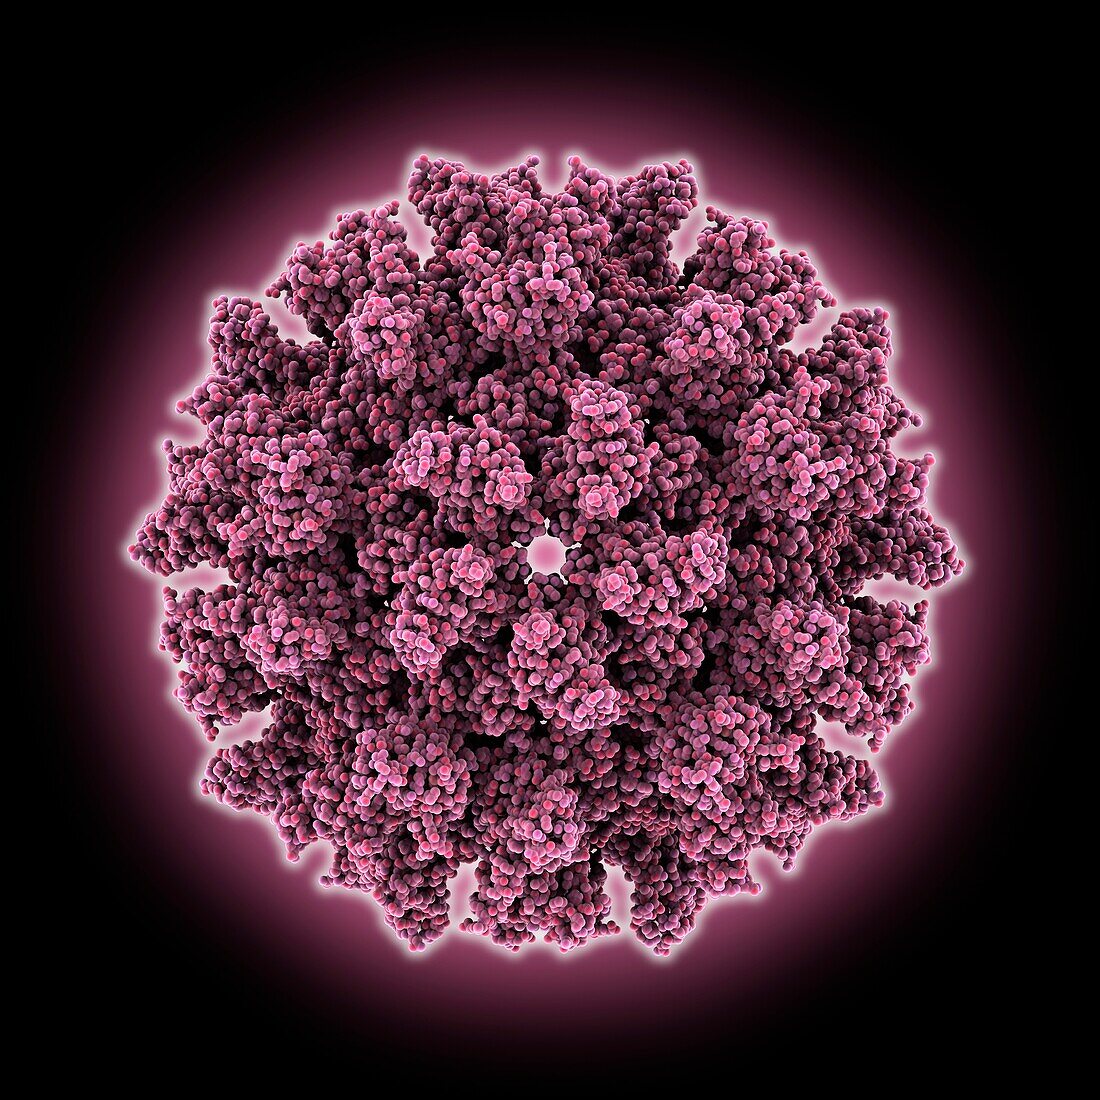 Rous sarcoma virus capsid, molecular model